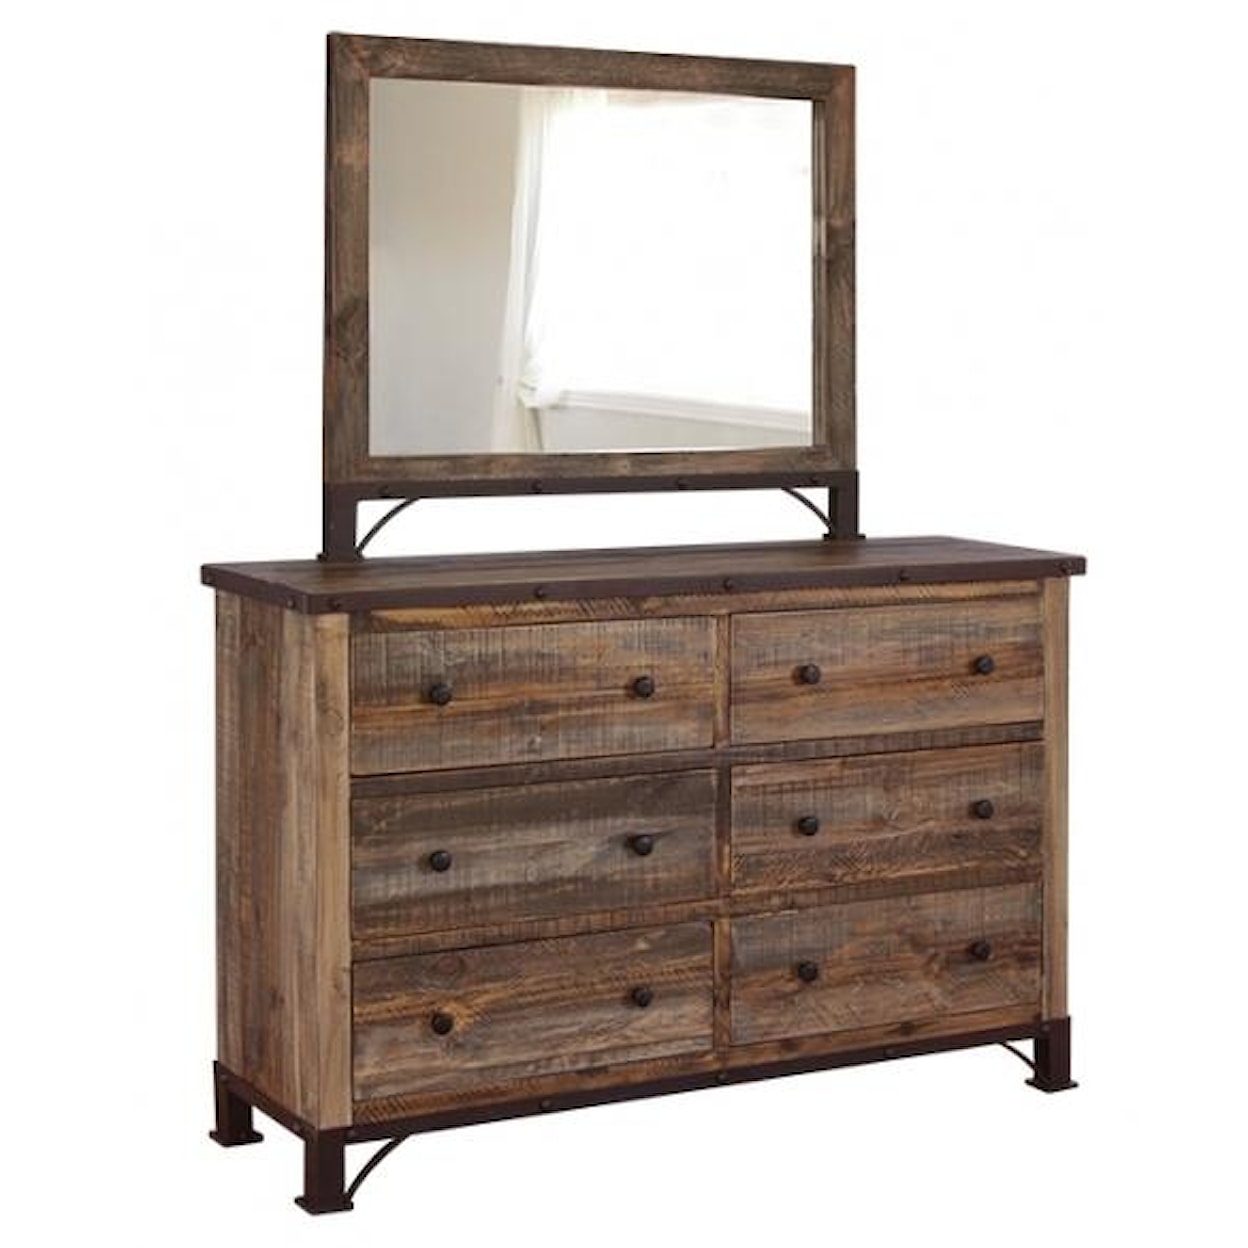 IFD 900 Antique Dresser and Mirror